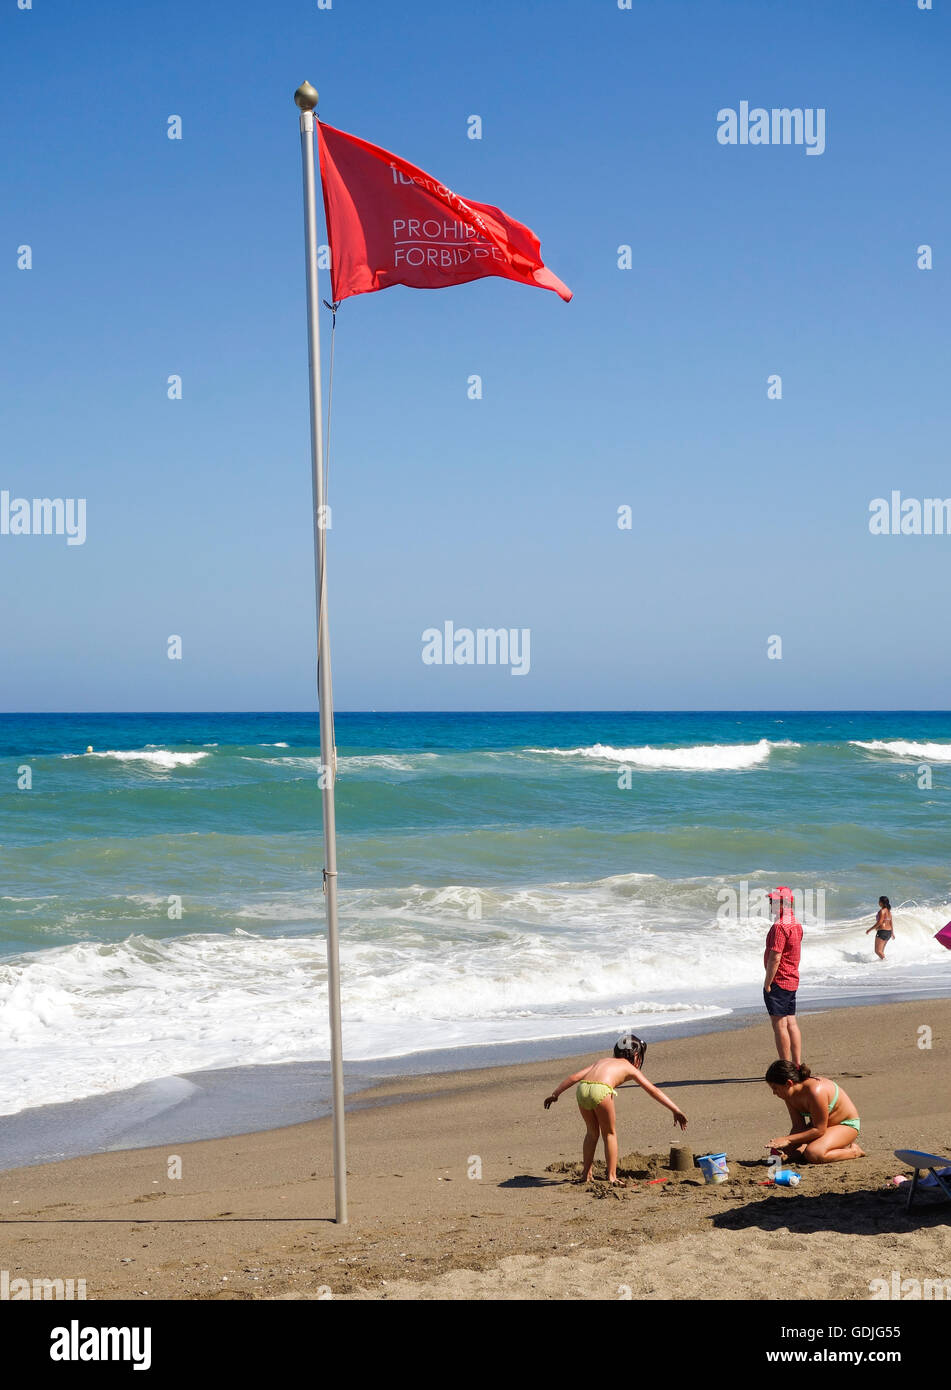 Red flag beach warning, no bathing, on Spanish beach, Fuengirola, Andalusia, Spain. Stock Photo